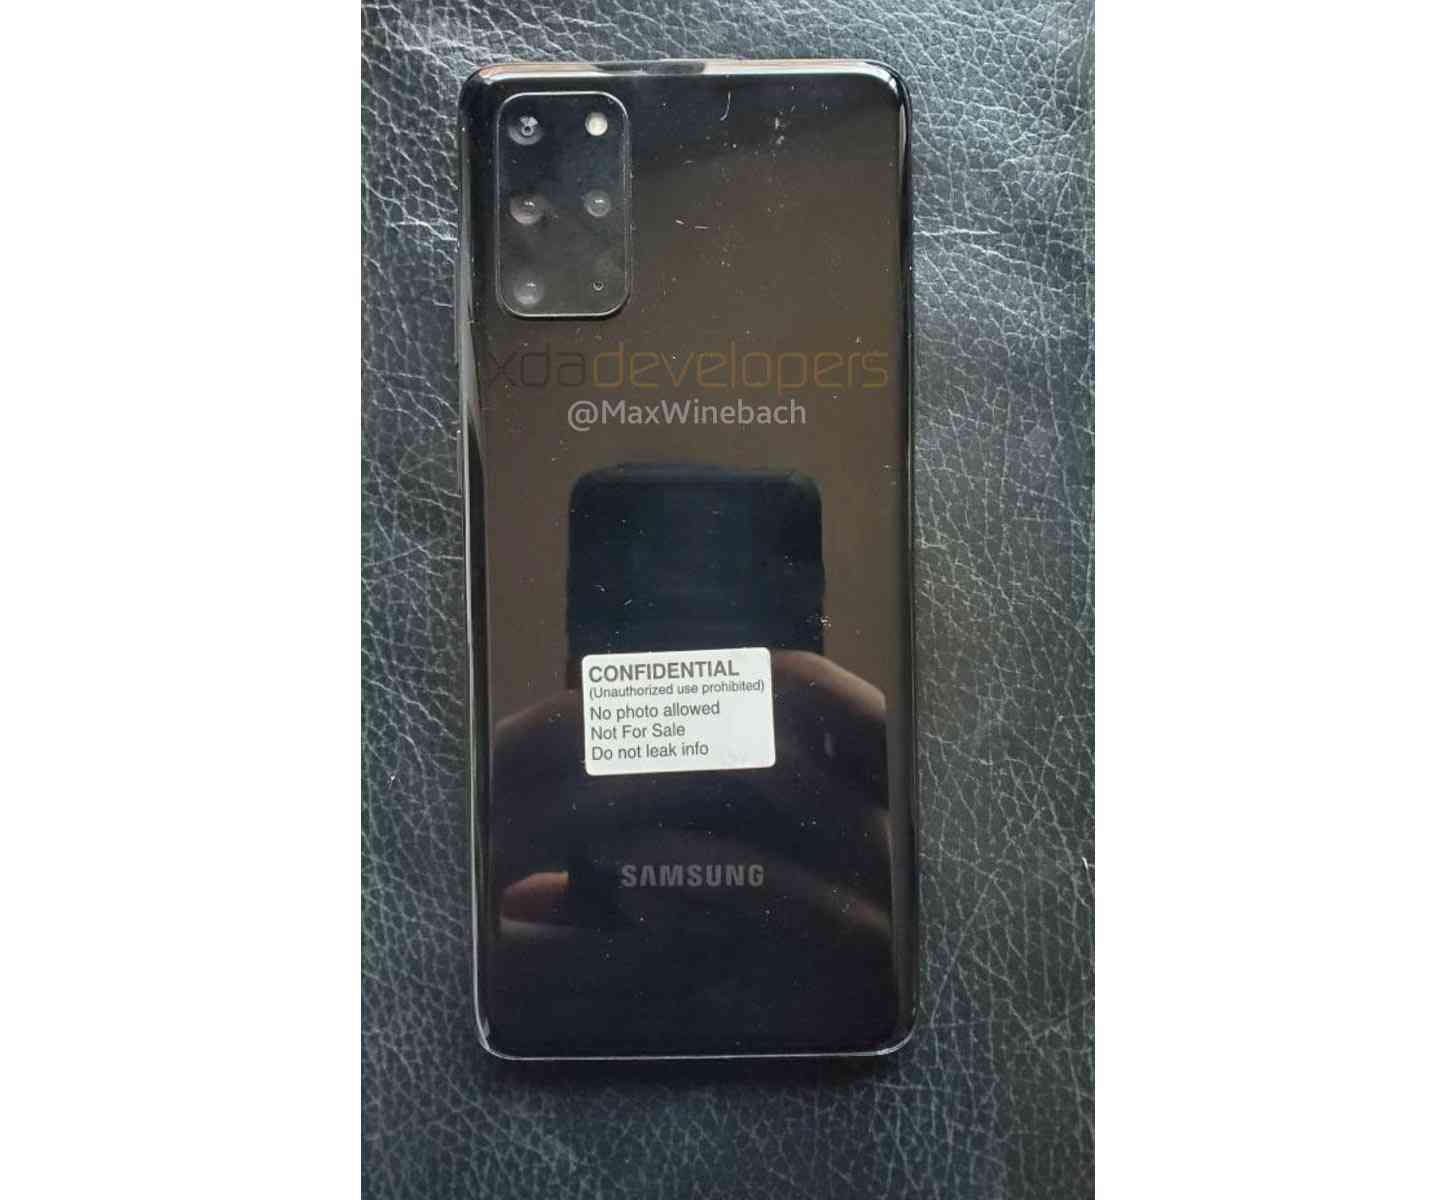 Samsung Galaxy S20+ cameras leak